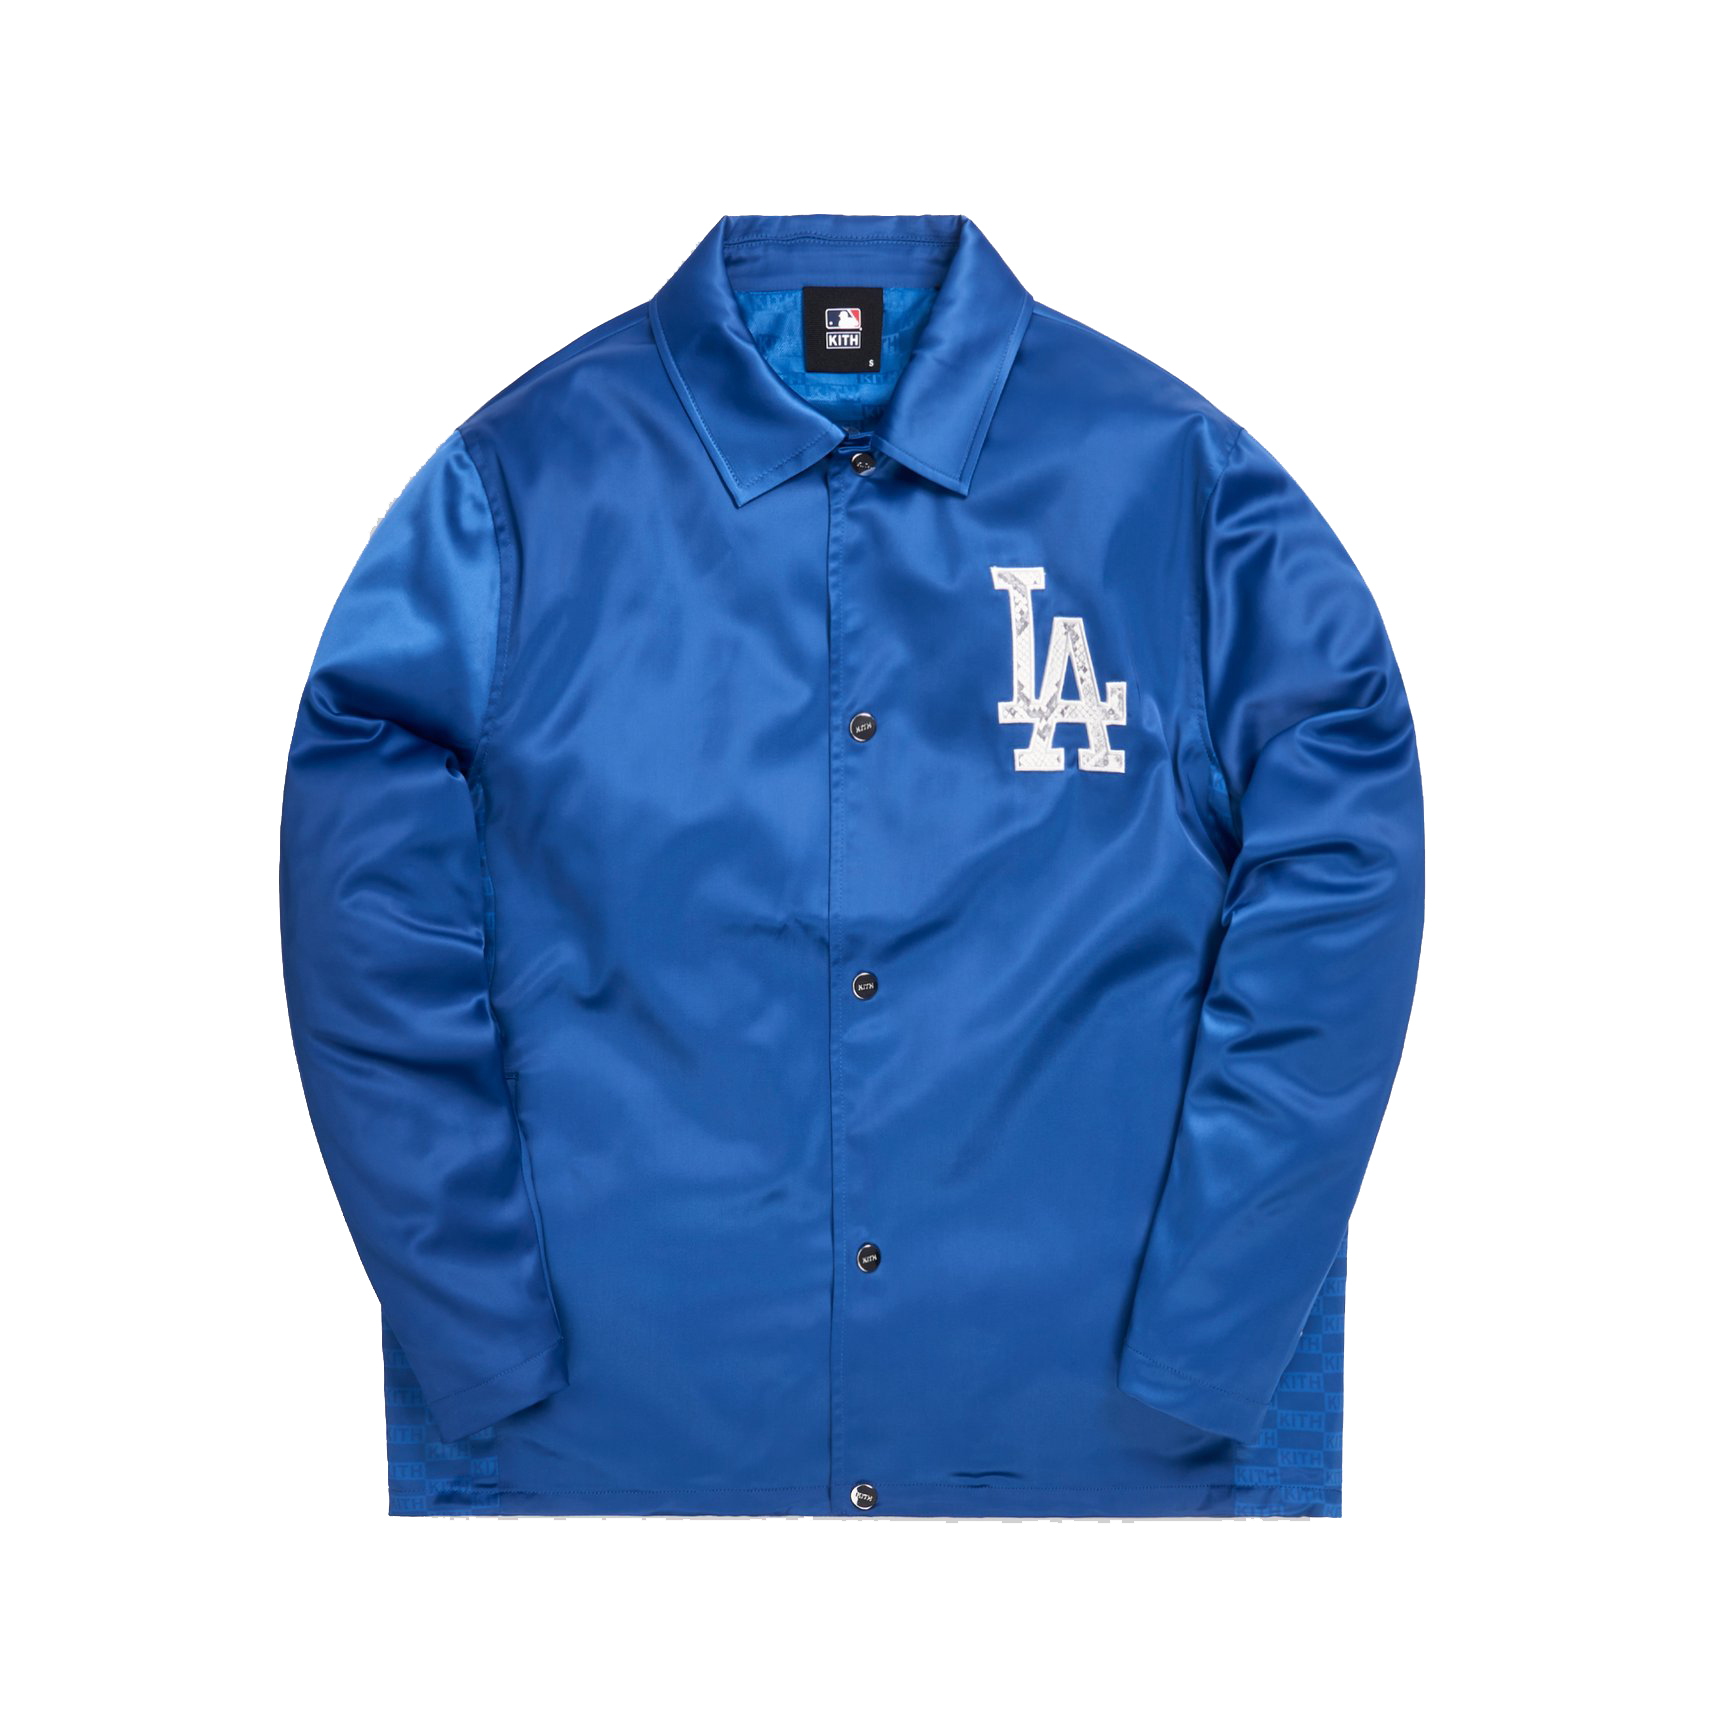 Kith For Major League Baseball Los Angeles Dodgers Coaches Jacket 